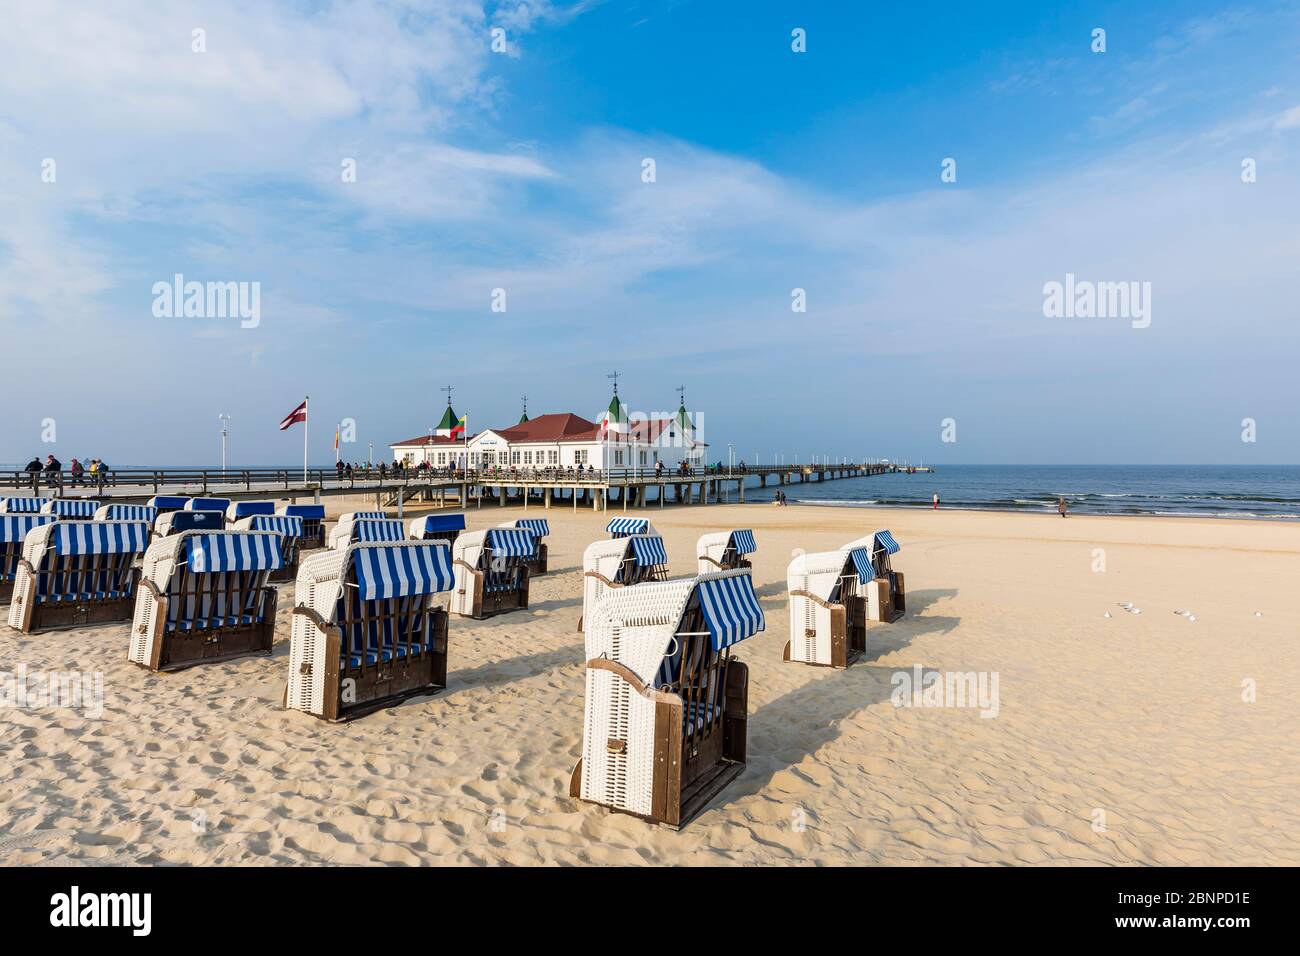 Germany, Mecklenburg-West Pomerania, Baltic Sea, Baltic Sea coast, Usedom Island, Ahlbeck, seaside resort, pier, beach, beach chairs Stock Photo